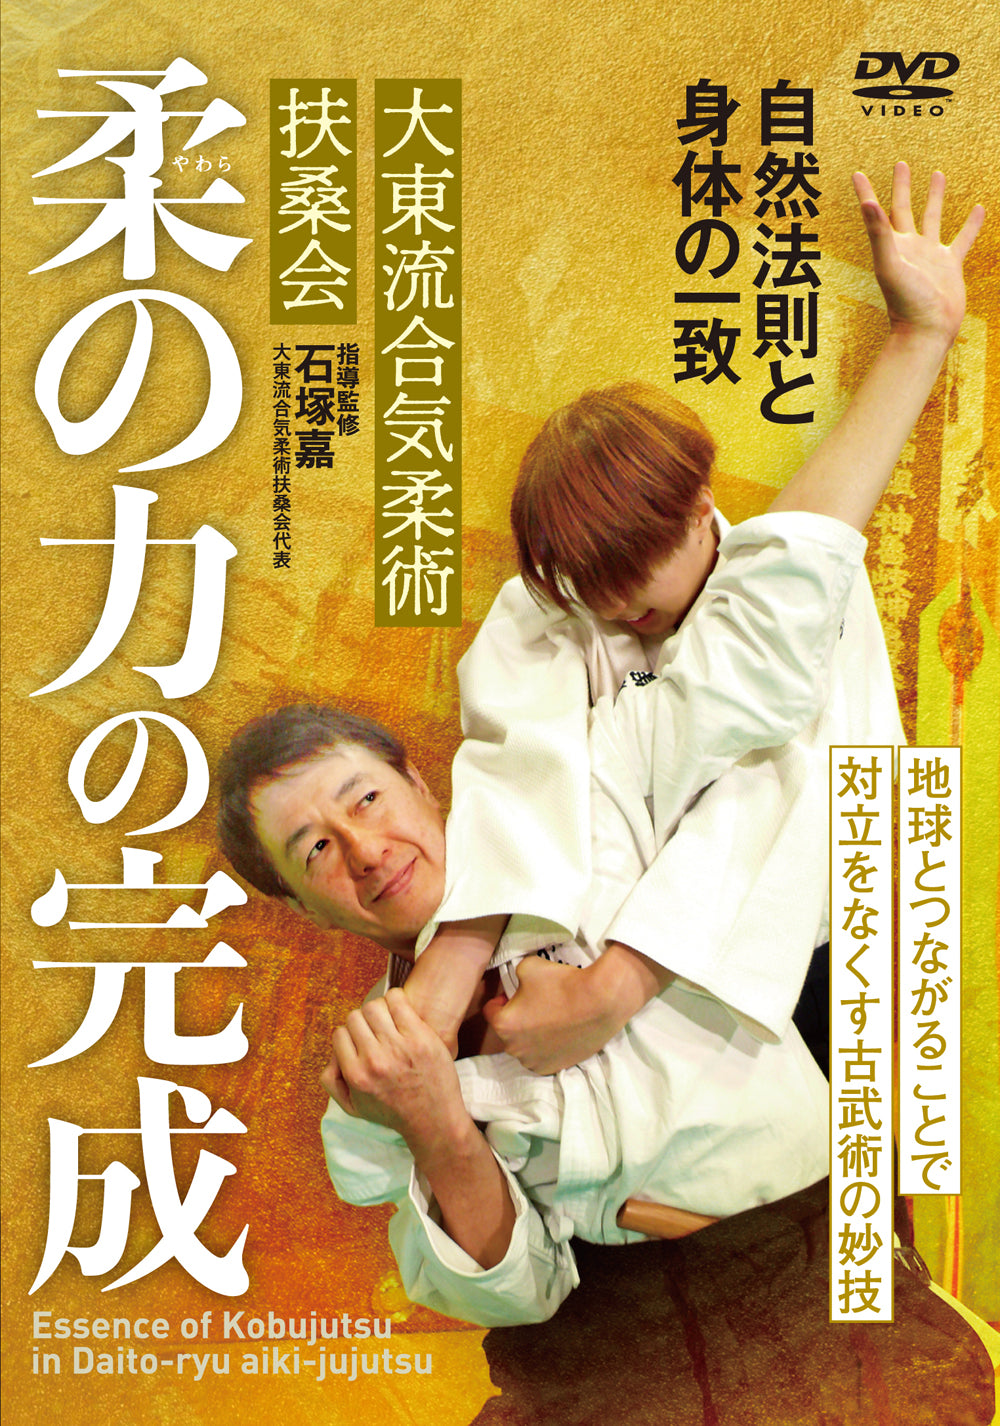 La esencia del Kobujutsu en el DVD Daito Ryu Aikijujutsu de Yoshimi Ishizuka